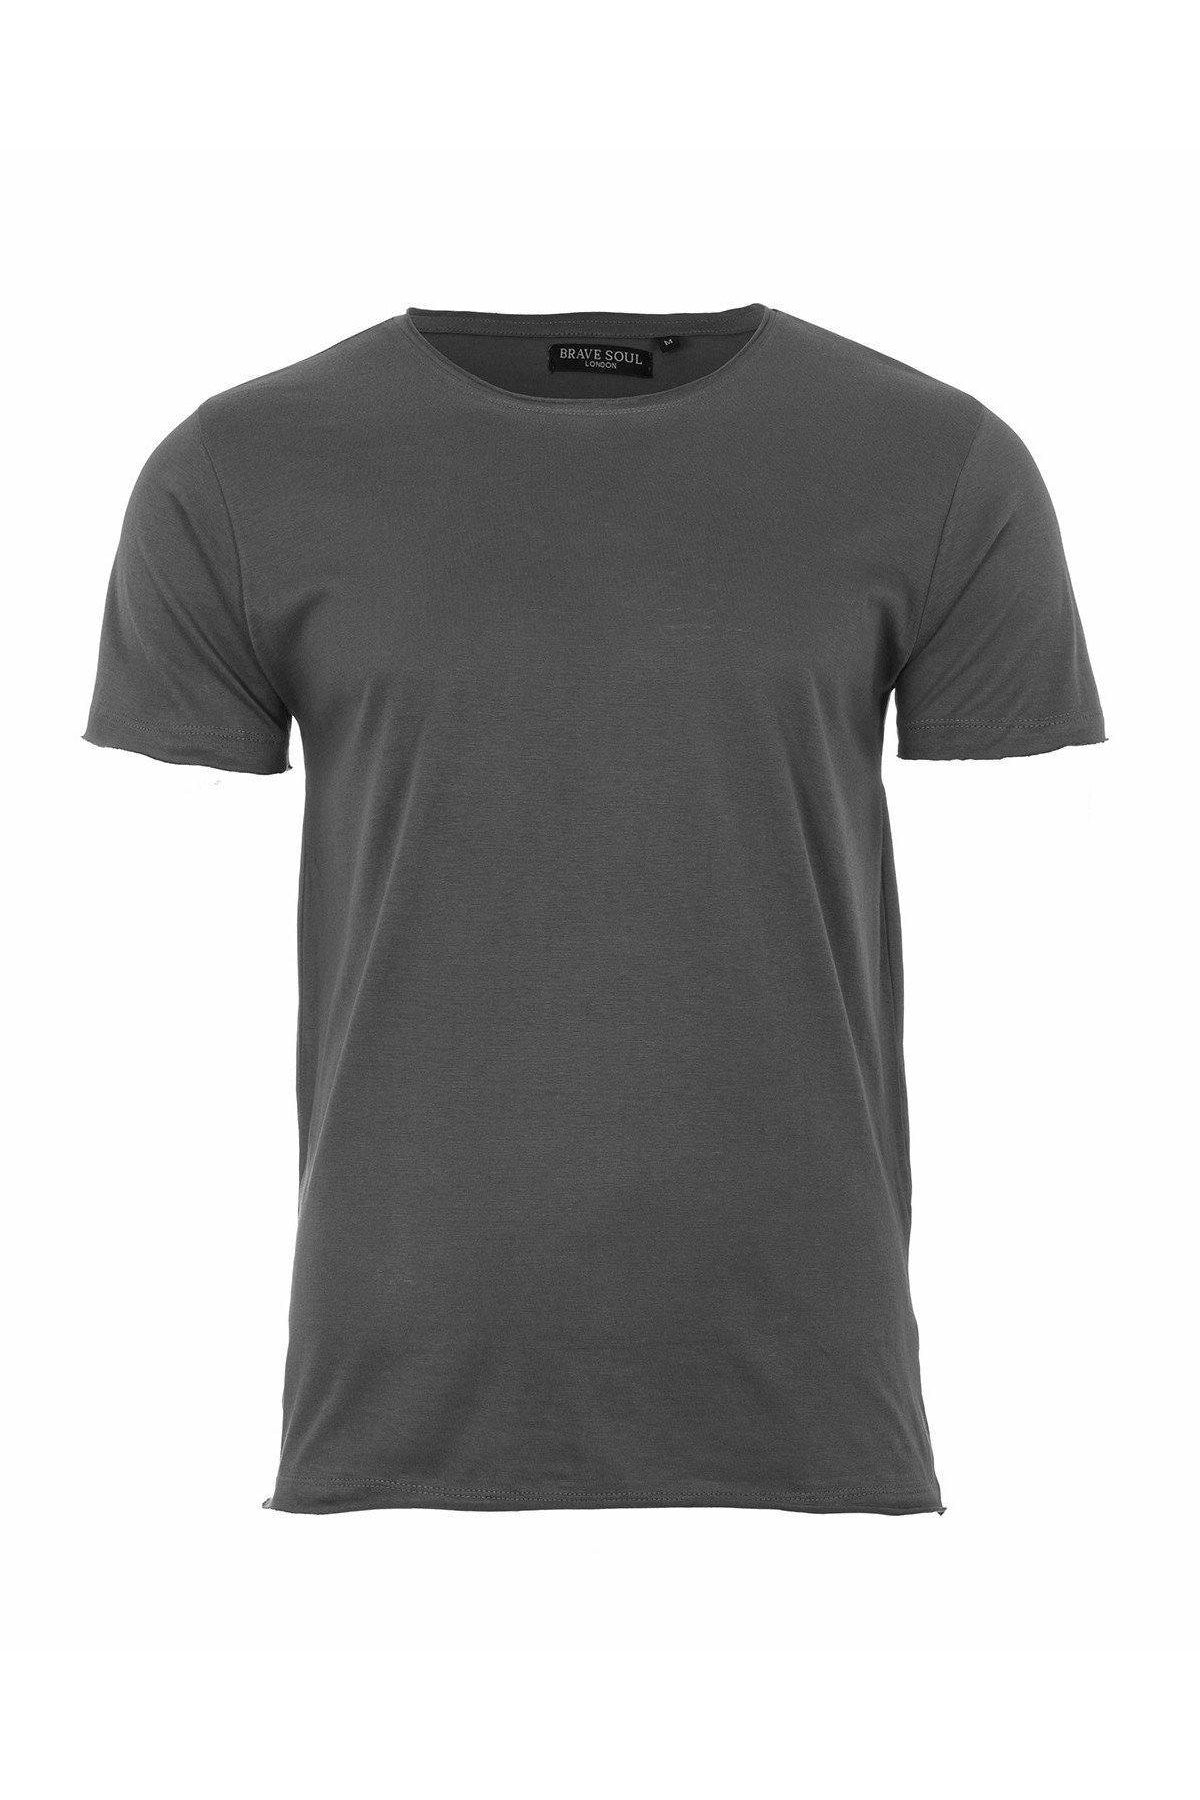 T-Shirts - Cutoff T-Shirt Charcoal